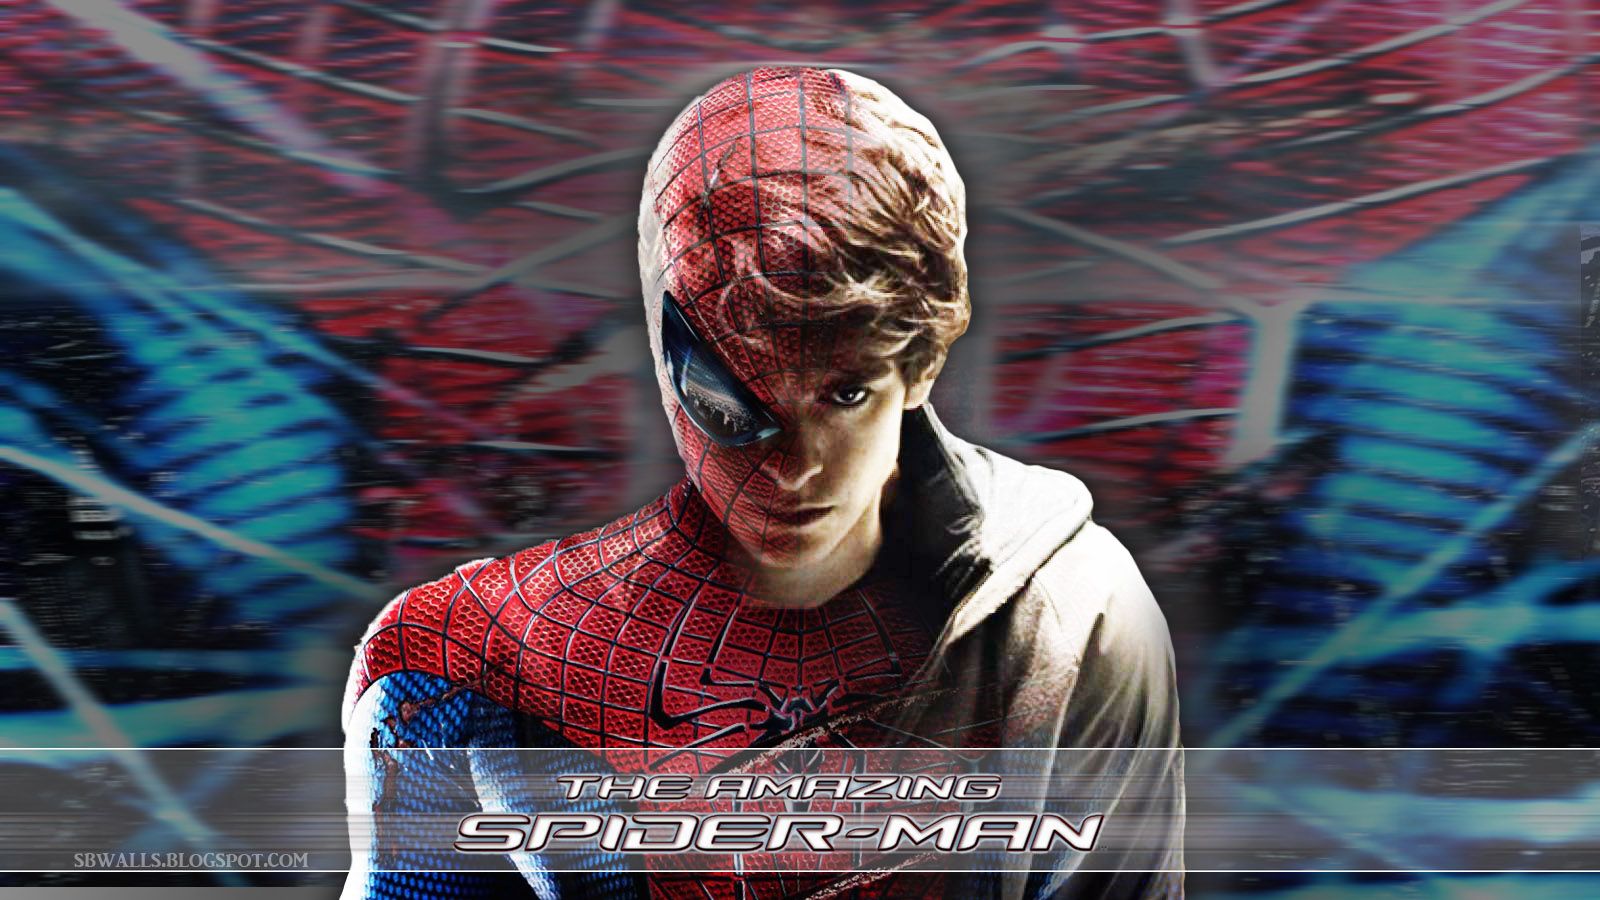 Spiderman Wallpaper - The Amazing Spider-Man(2012) Wallpaper ...